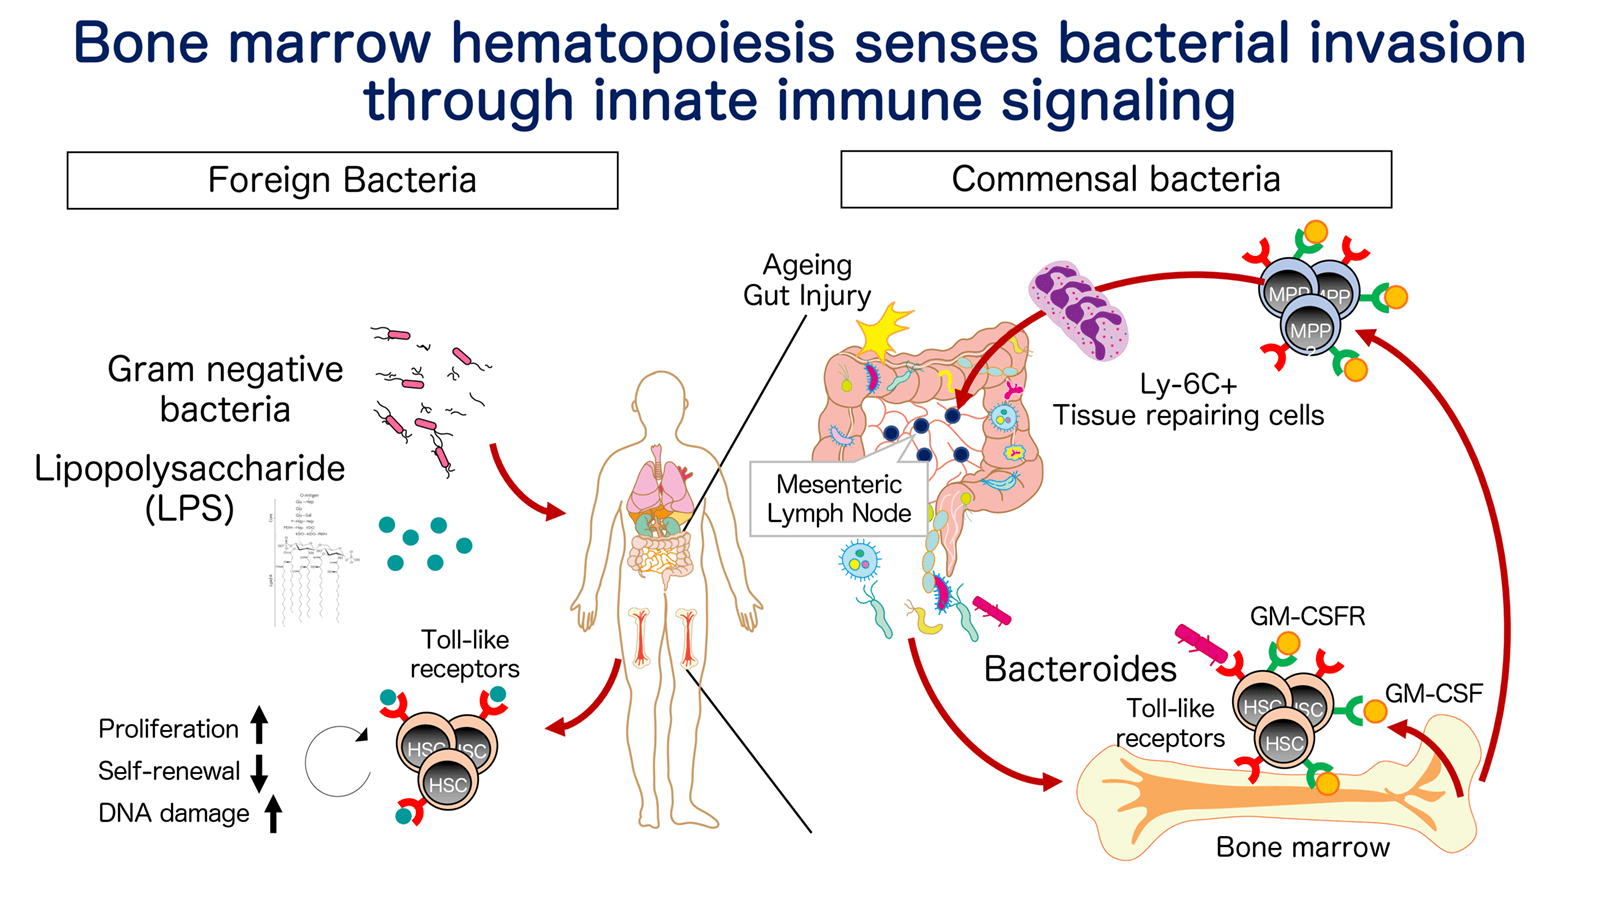 Bone marrow hematopoiesis senses bacterial invasion through innate immune signaling